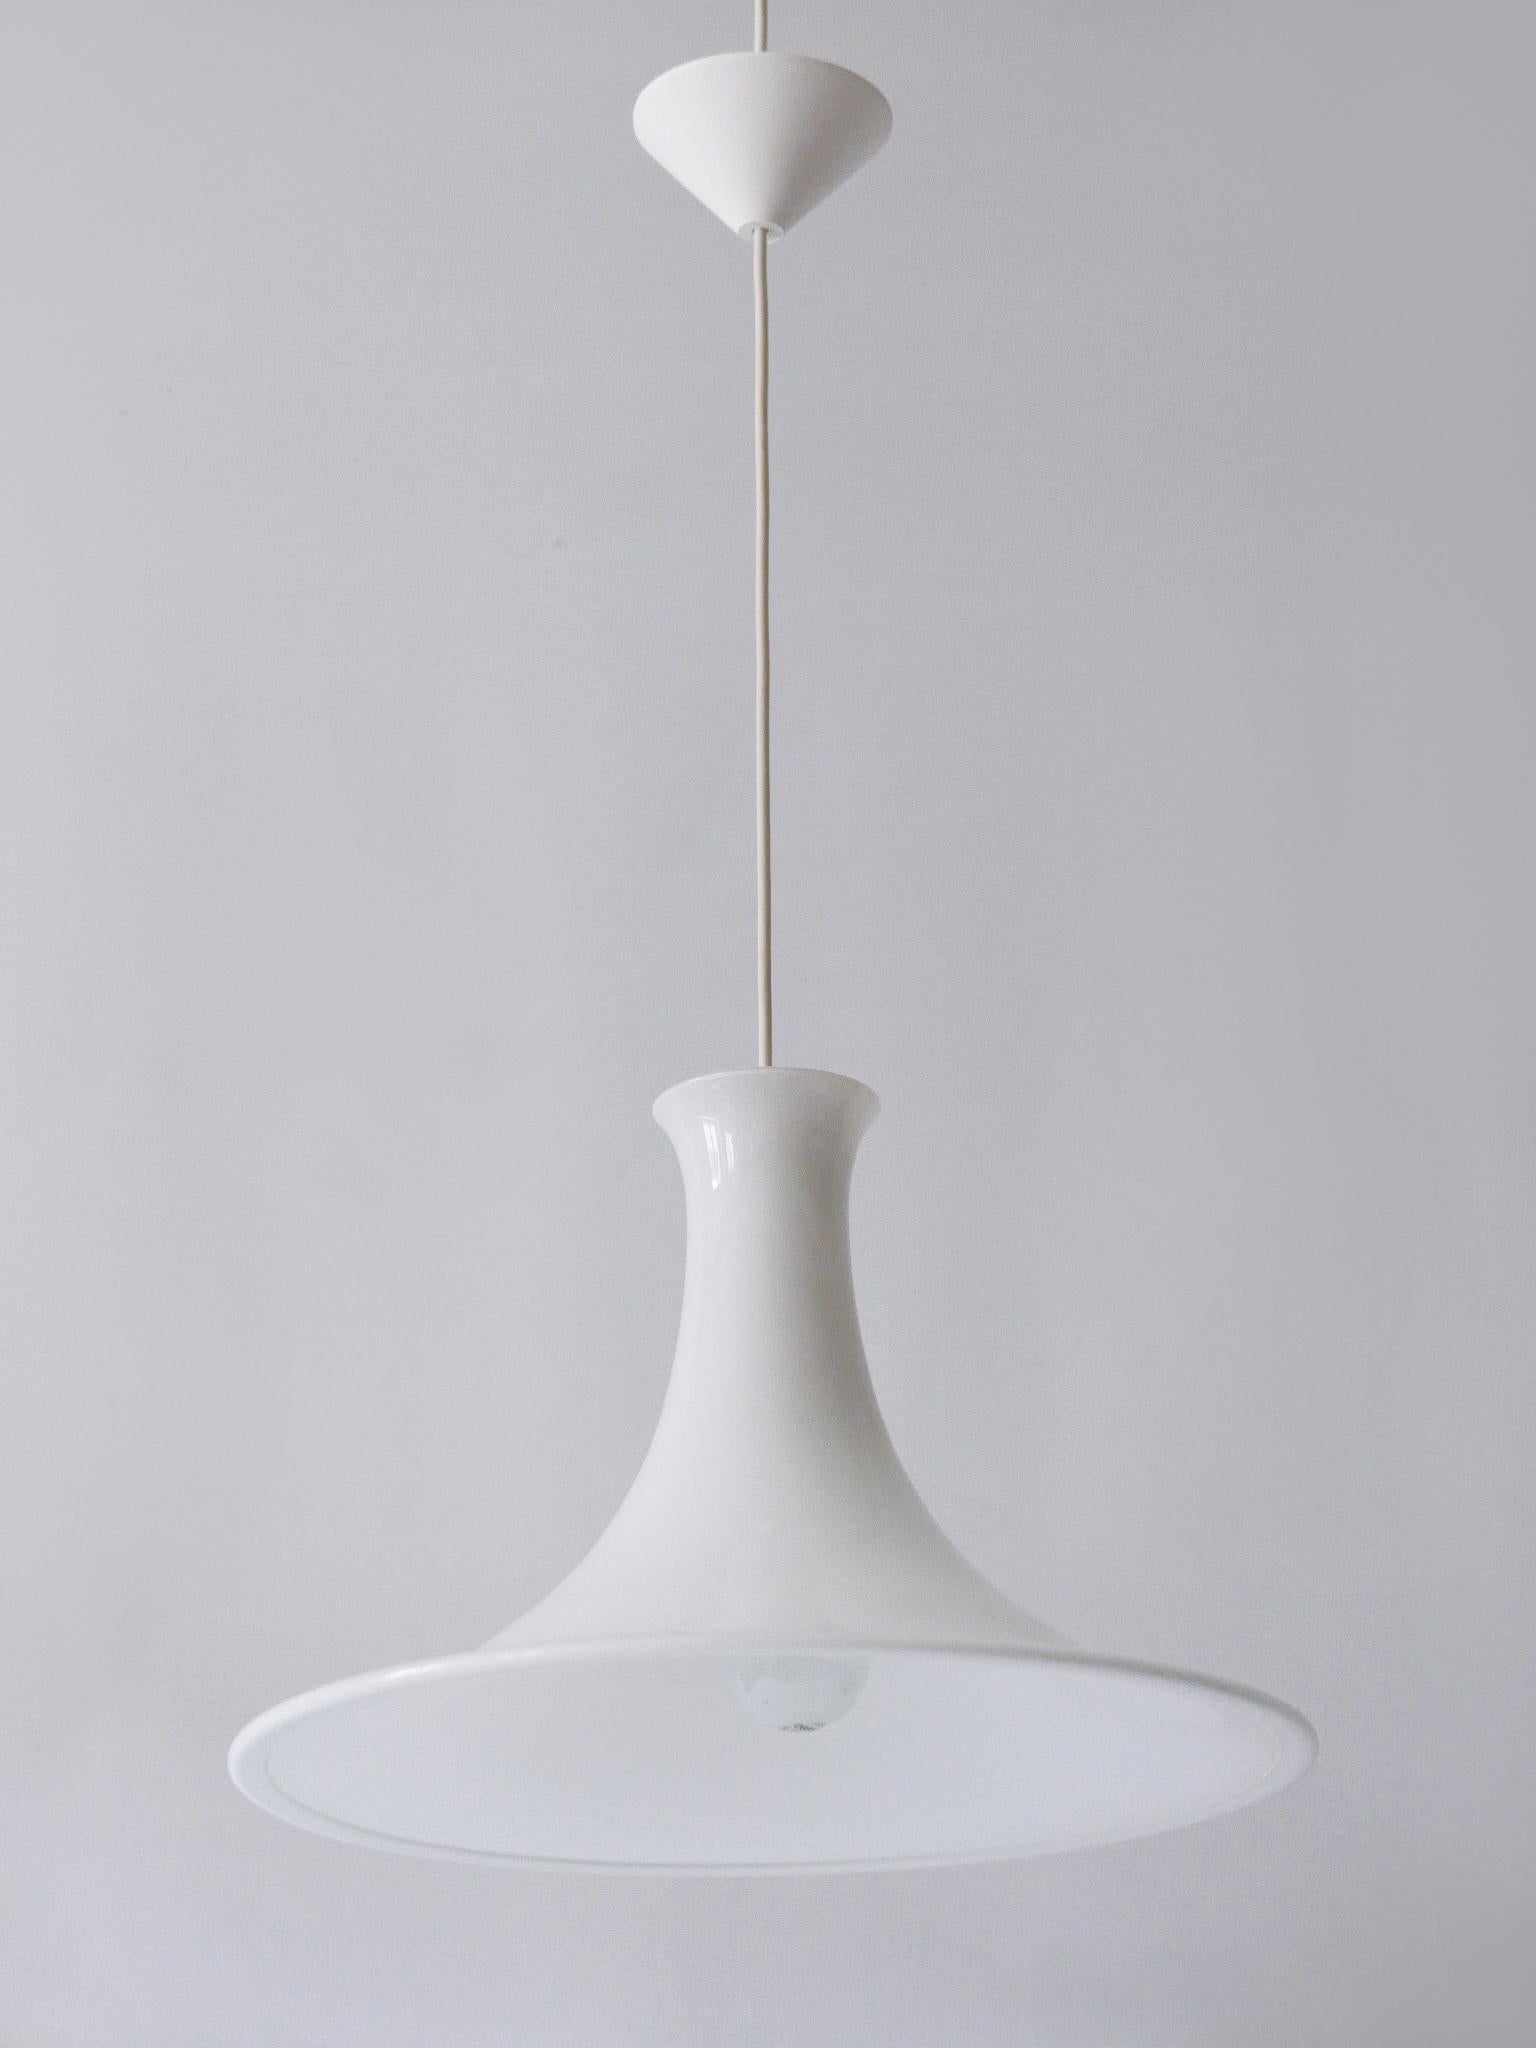 Mandarin Pendant Lamp by Michael Bang Für Holmegaard/Royal Copenhagen 1980s For Sale 1